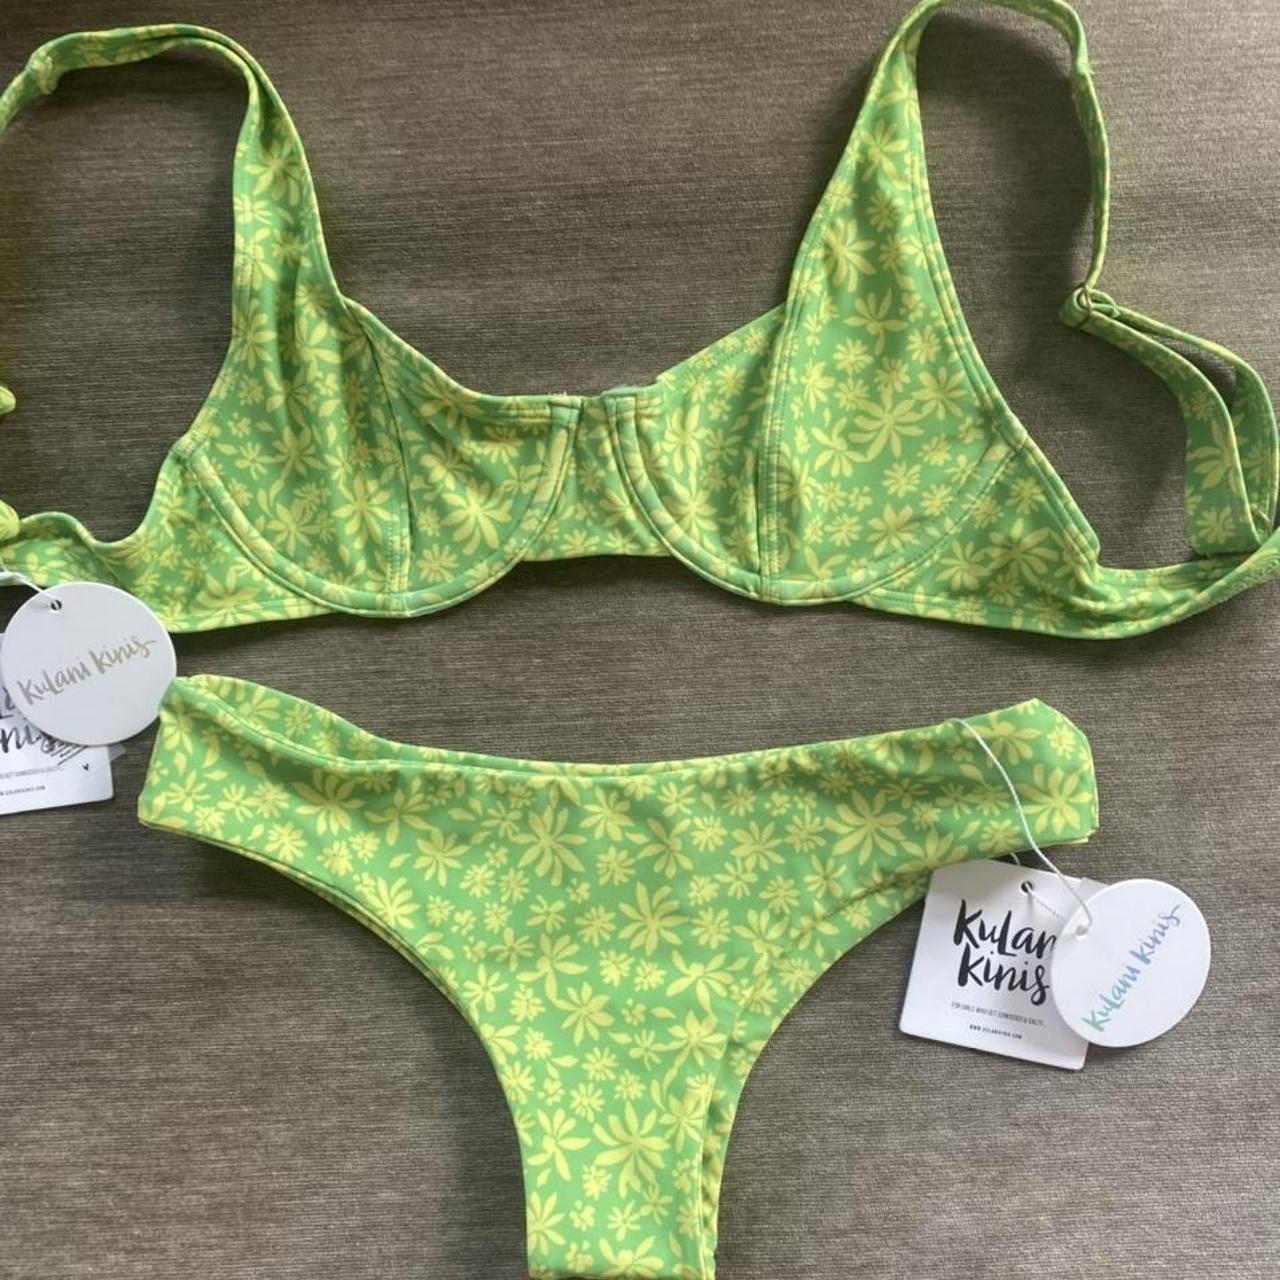 Kulani Kinis Women's Green and Yellow Bikinis-and-tankini-sets | Depop